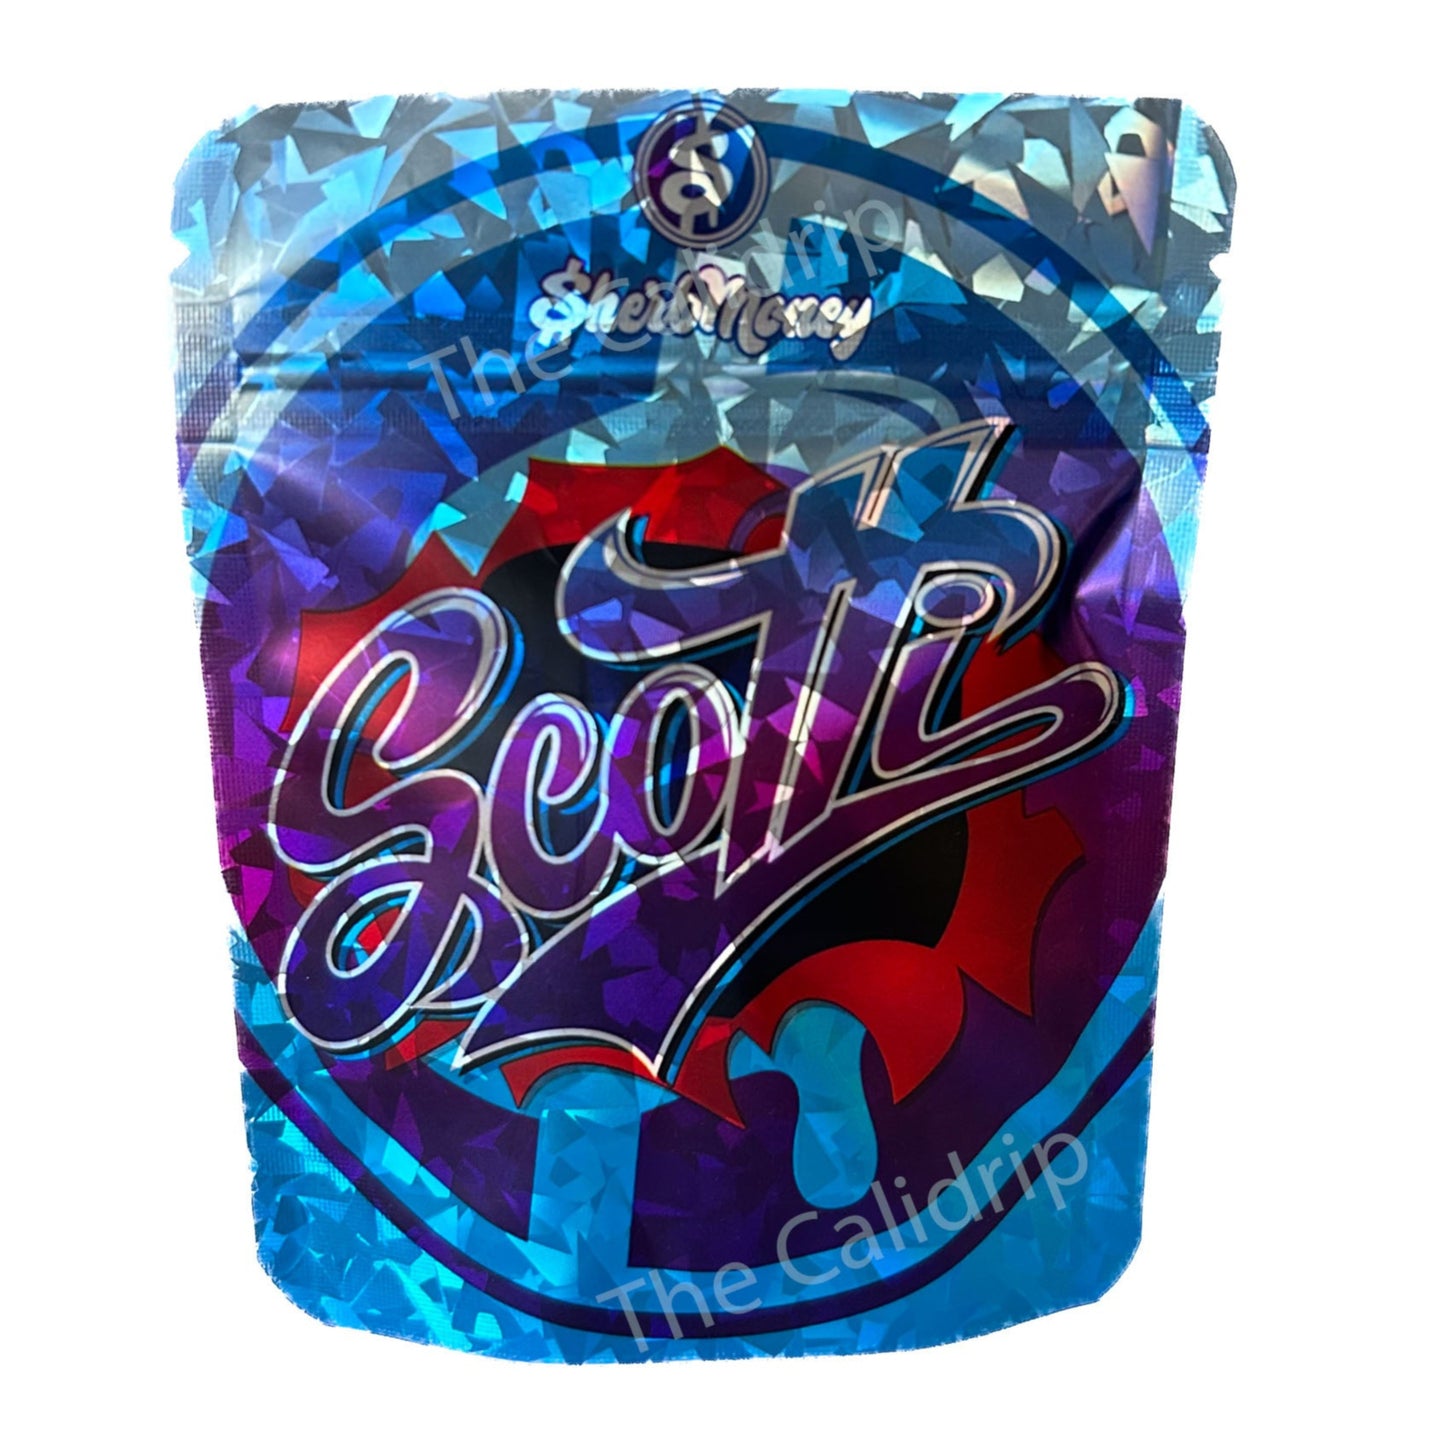 Scotti Sherb Money Diamond 3.5G Mylar Bags